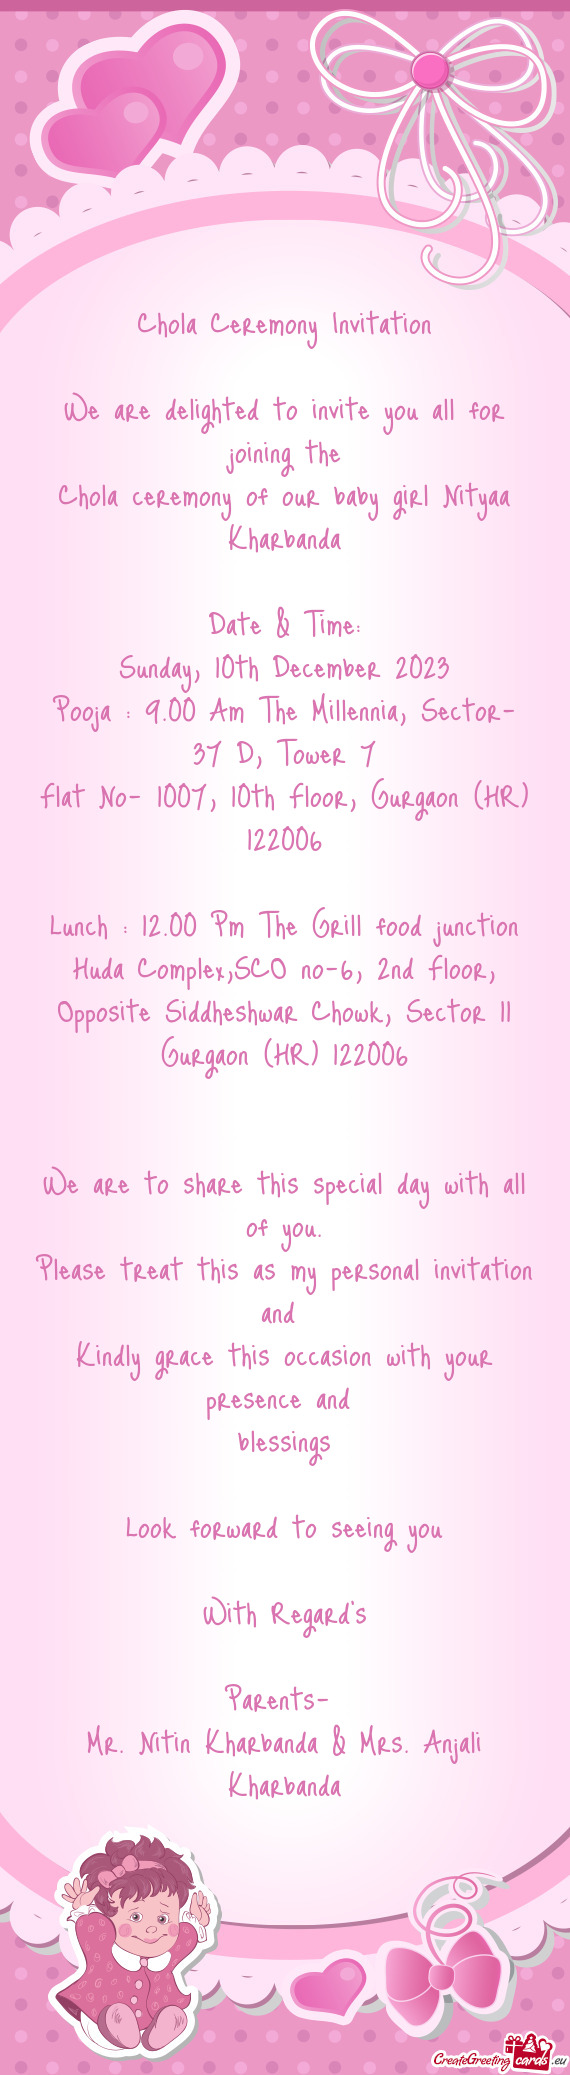 Flat No- 1007, 10th Floor, Gurgaon (HR) 122006